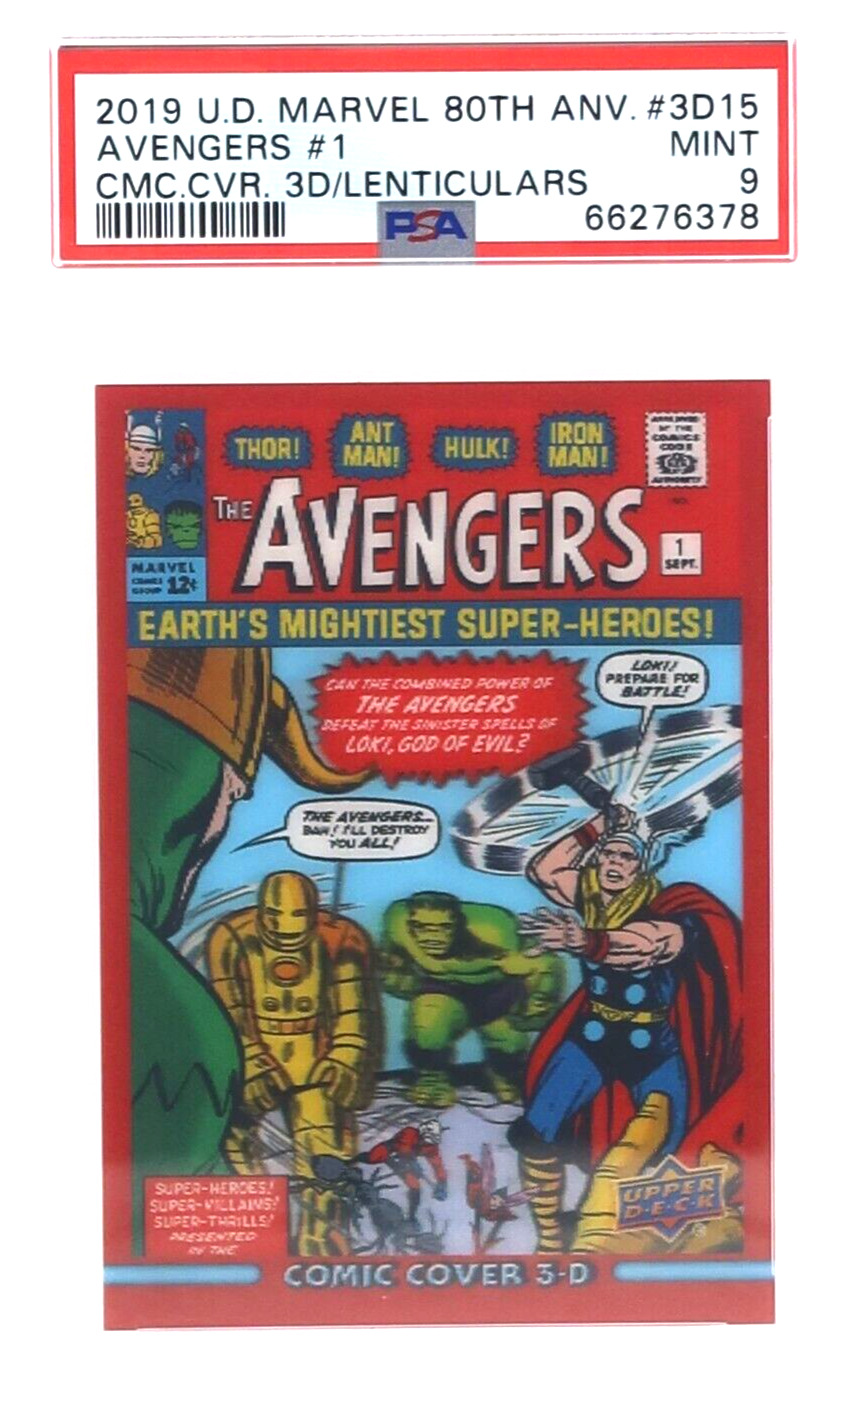 2019 UD Marvel 80th Anniversary AVENGERS #1 Comic Cover Lenticular PSA 9 MINT